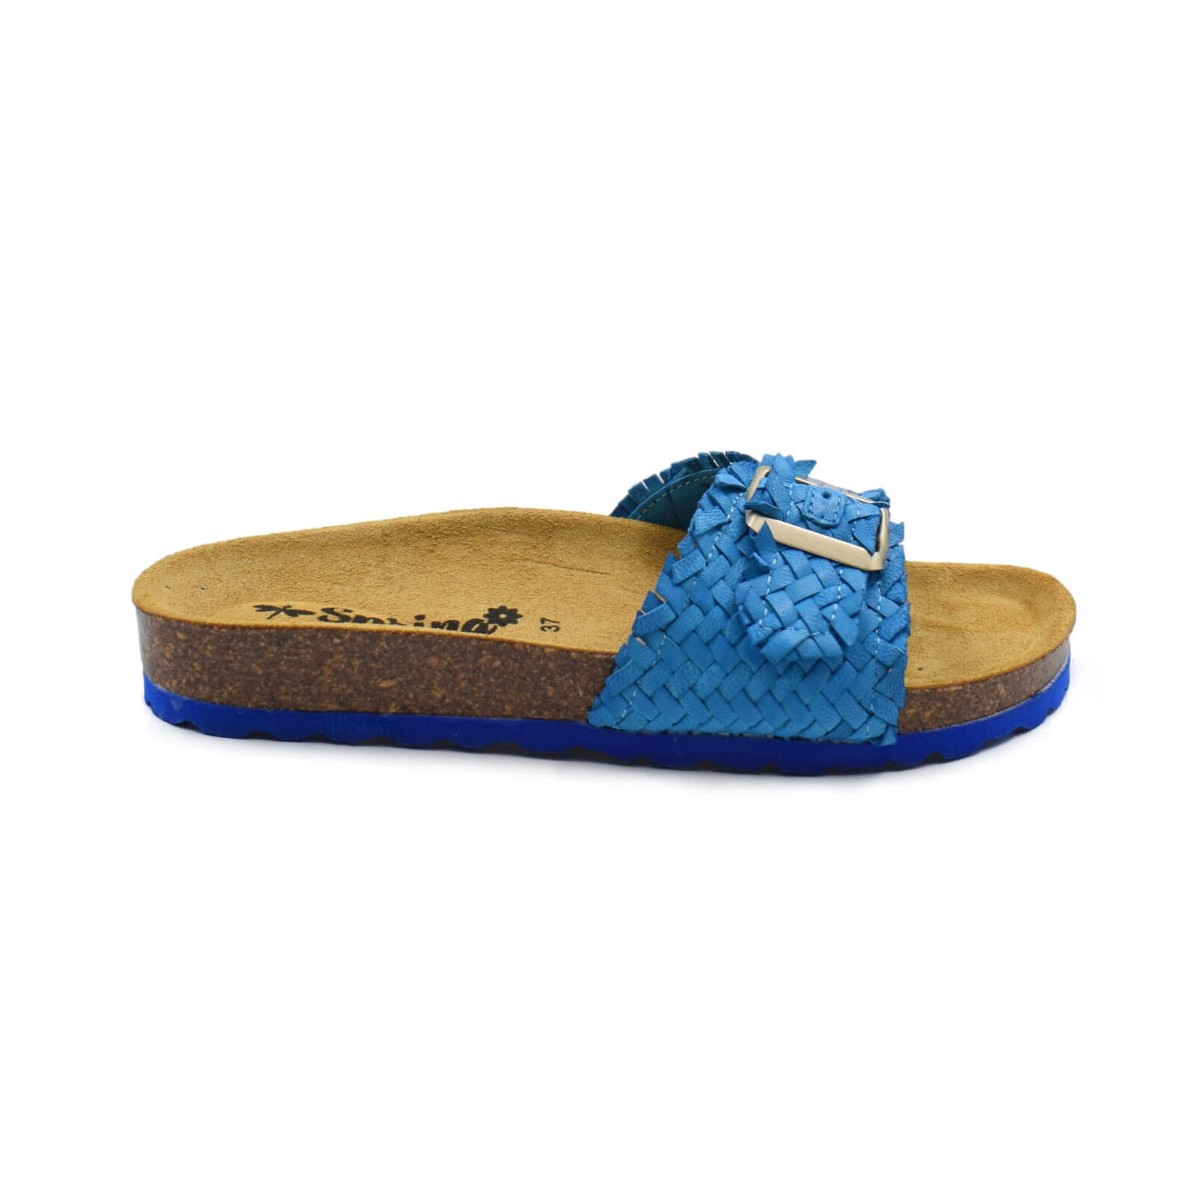 Blue leather flat bio sandals by Biocomfort